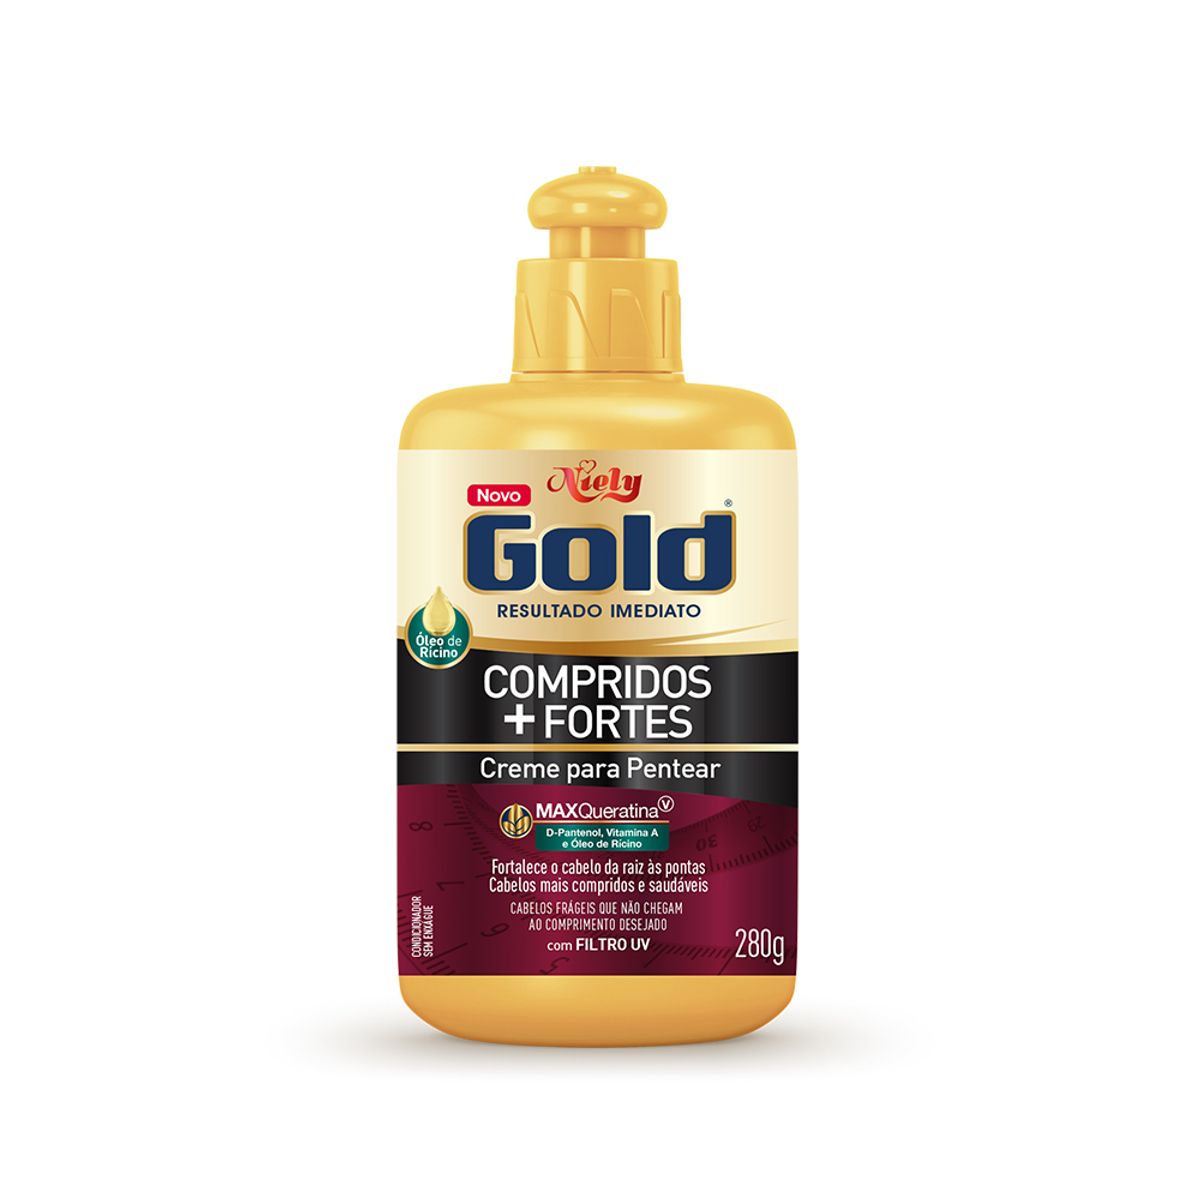 Creme para Pentear Niely Gold Compridos + Fortes Frasco 250g image number 0